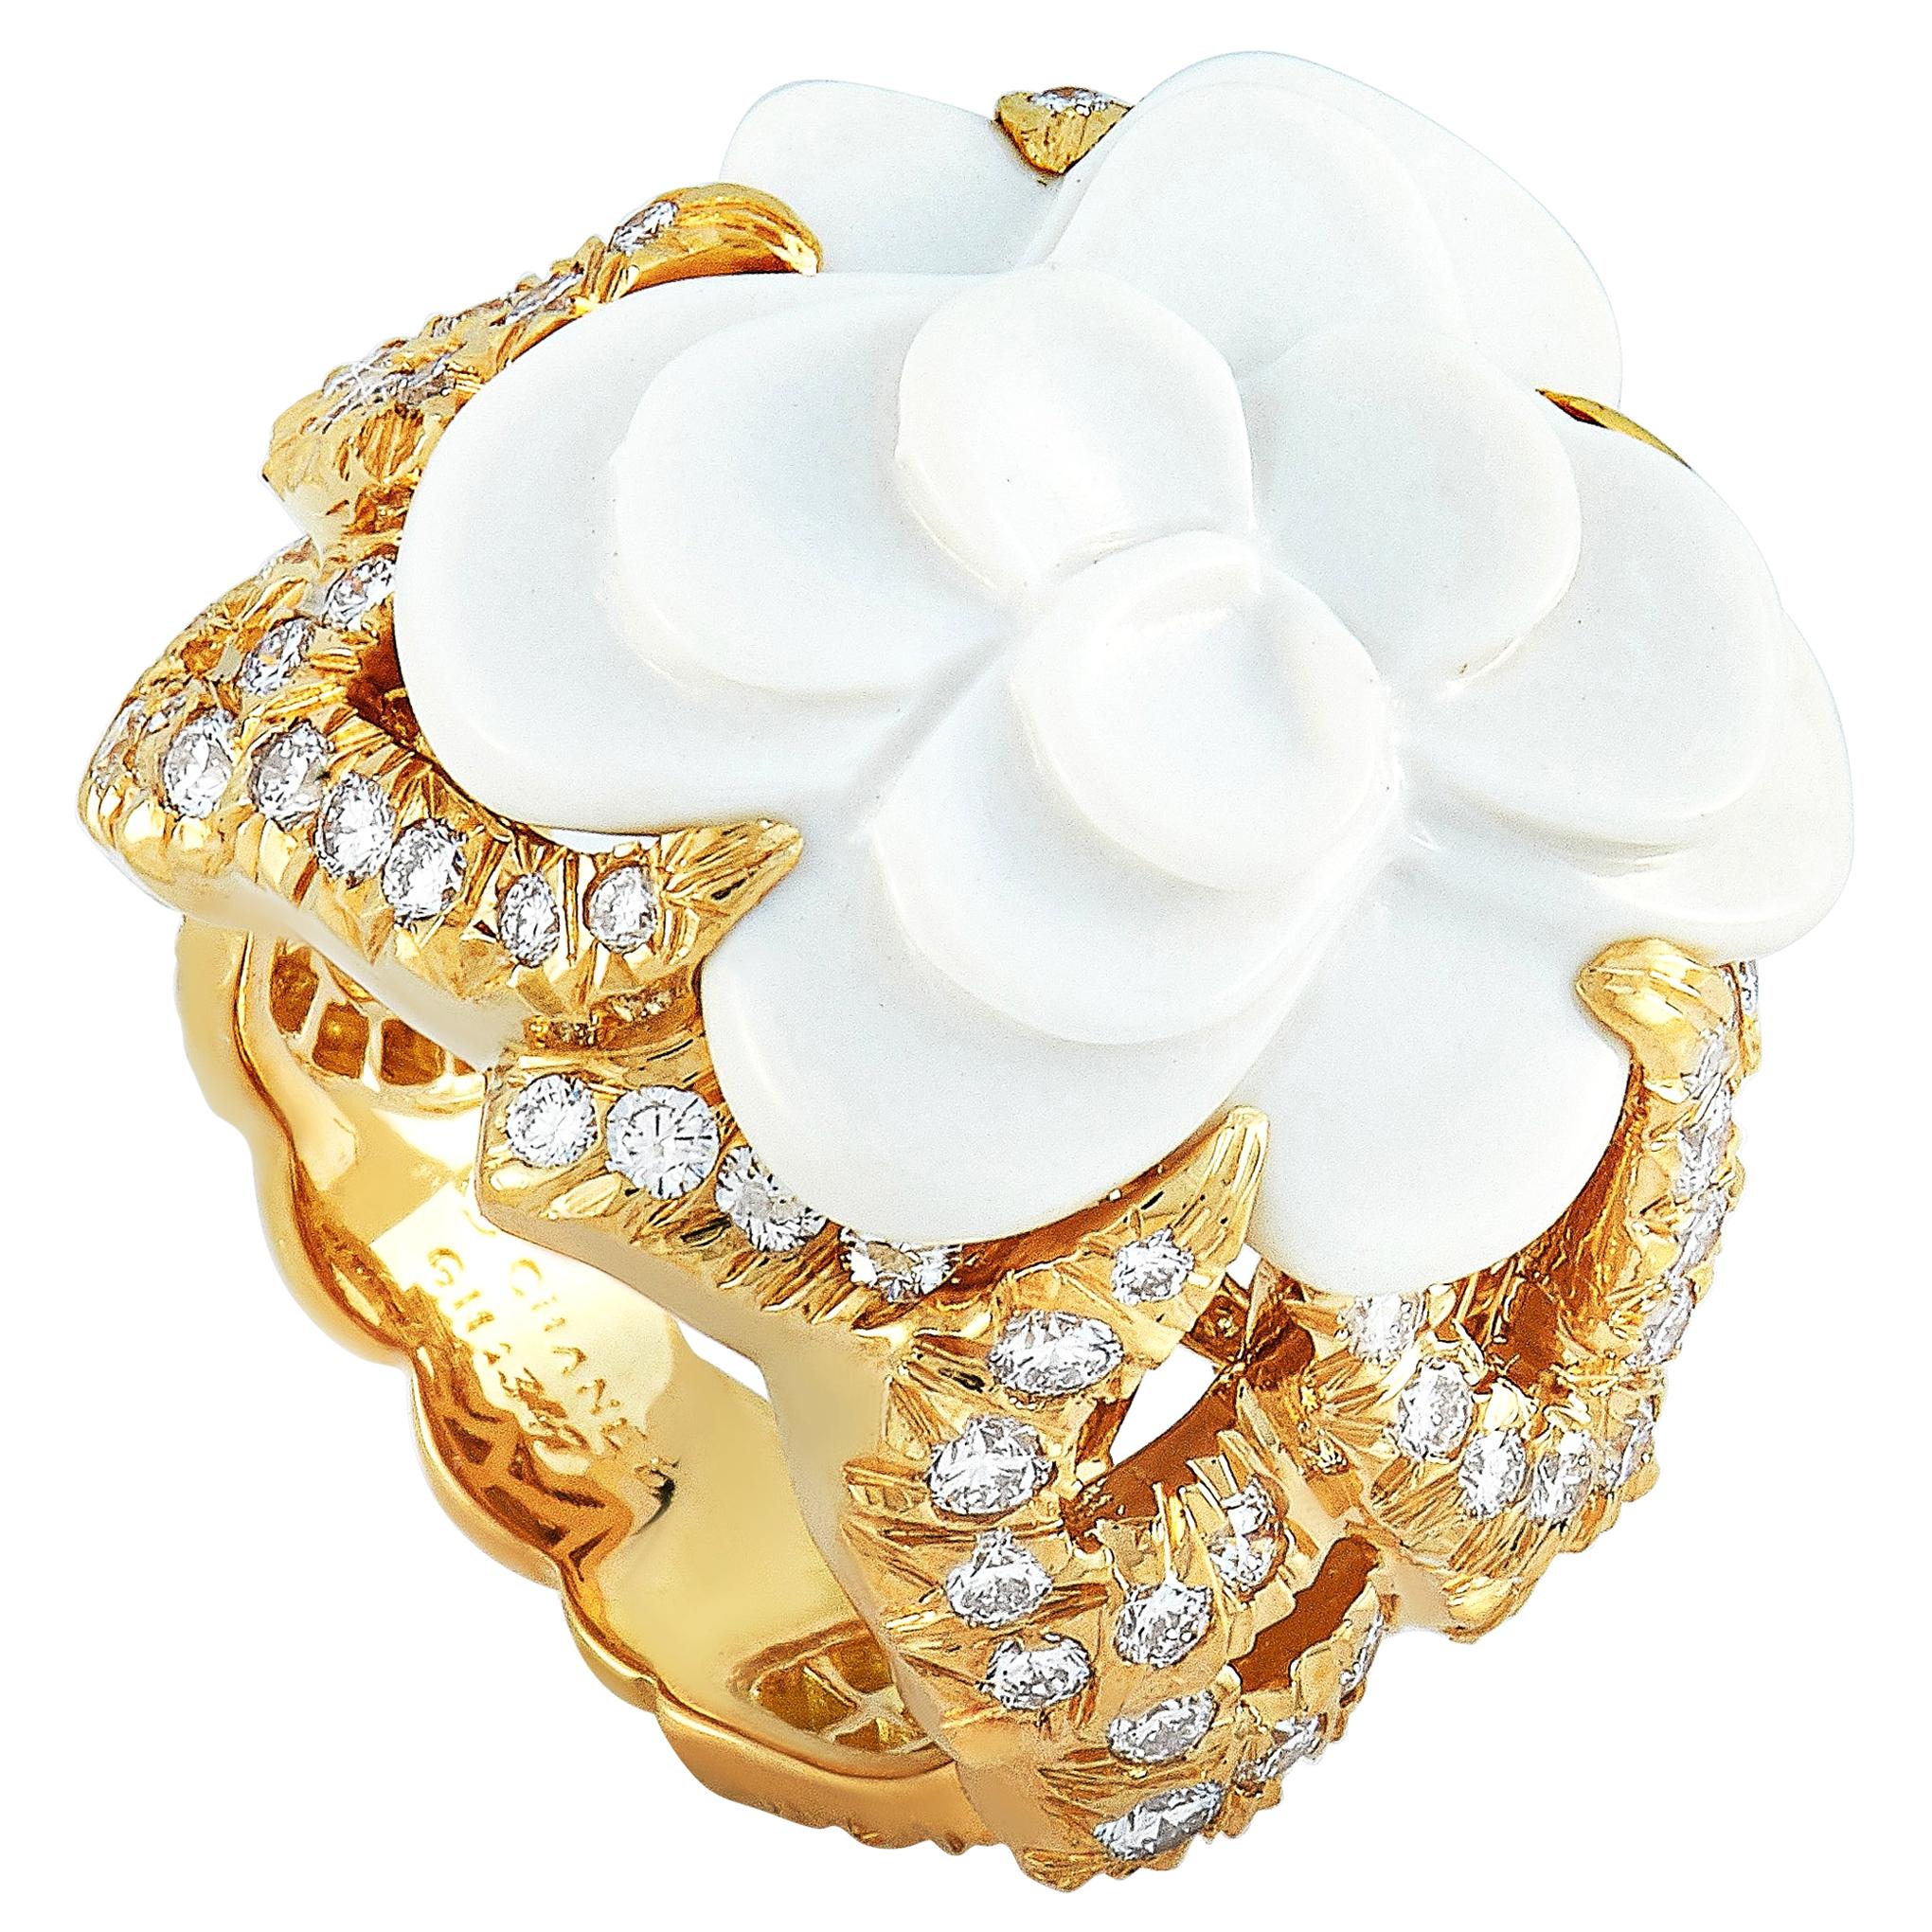 Chanel Camélia 18 Karat Yellow Gold and Ceramic, 3.00 Carat Diamond Flower Ring